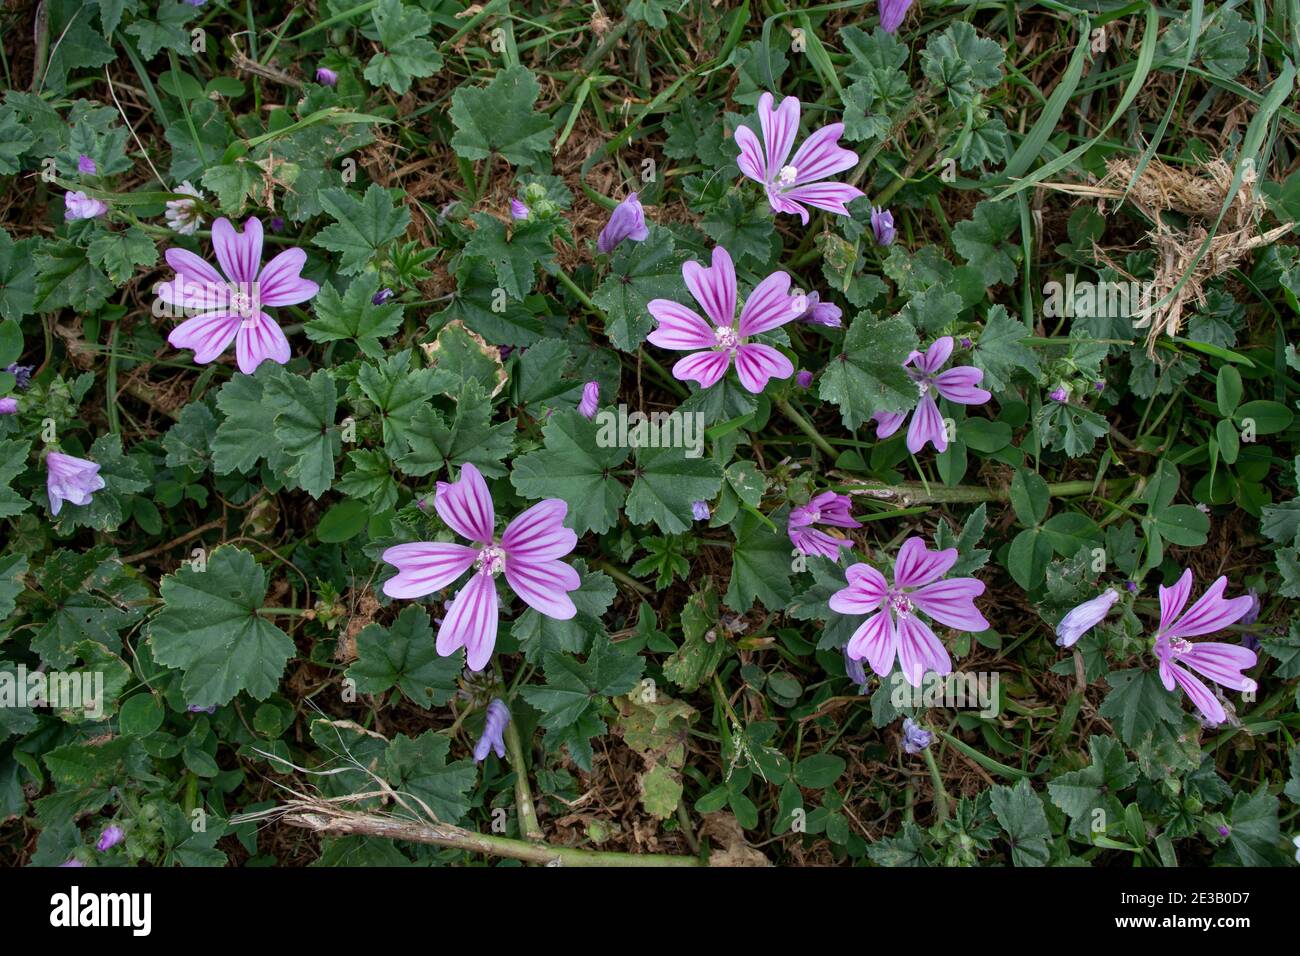 Common mallow or malva sylvestris bright purple flowers with dark veins Stock Photo